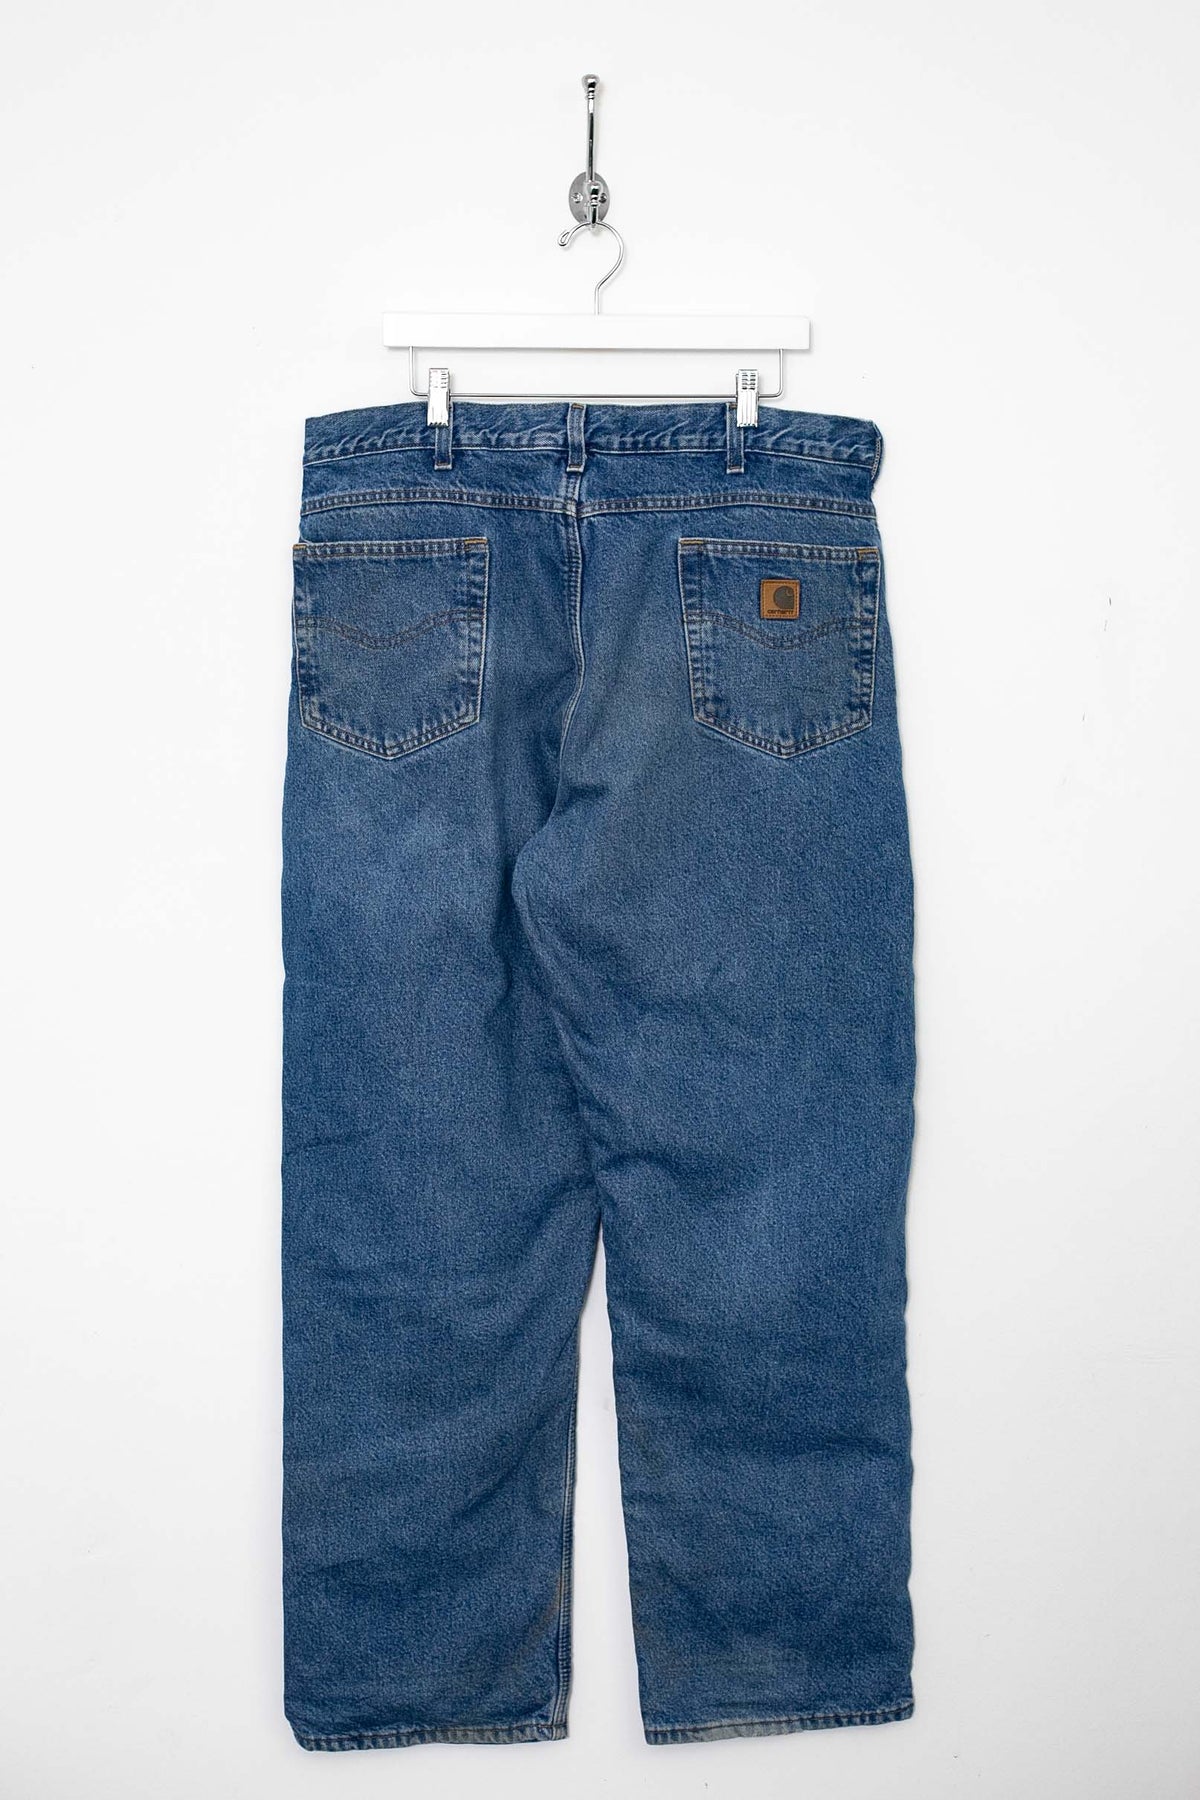 00s Carhartt Jeans (XL)